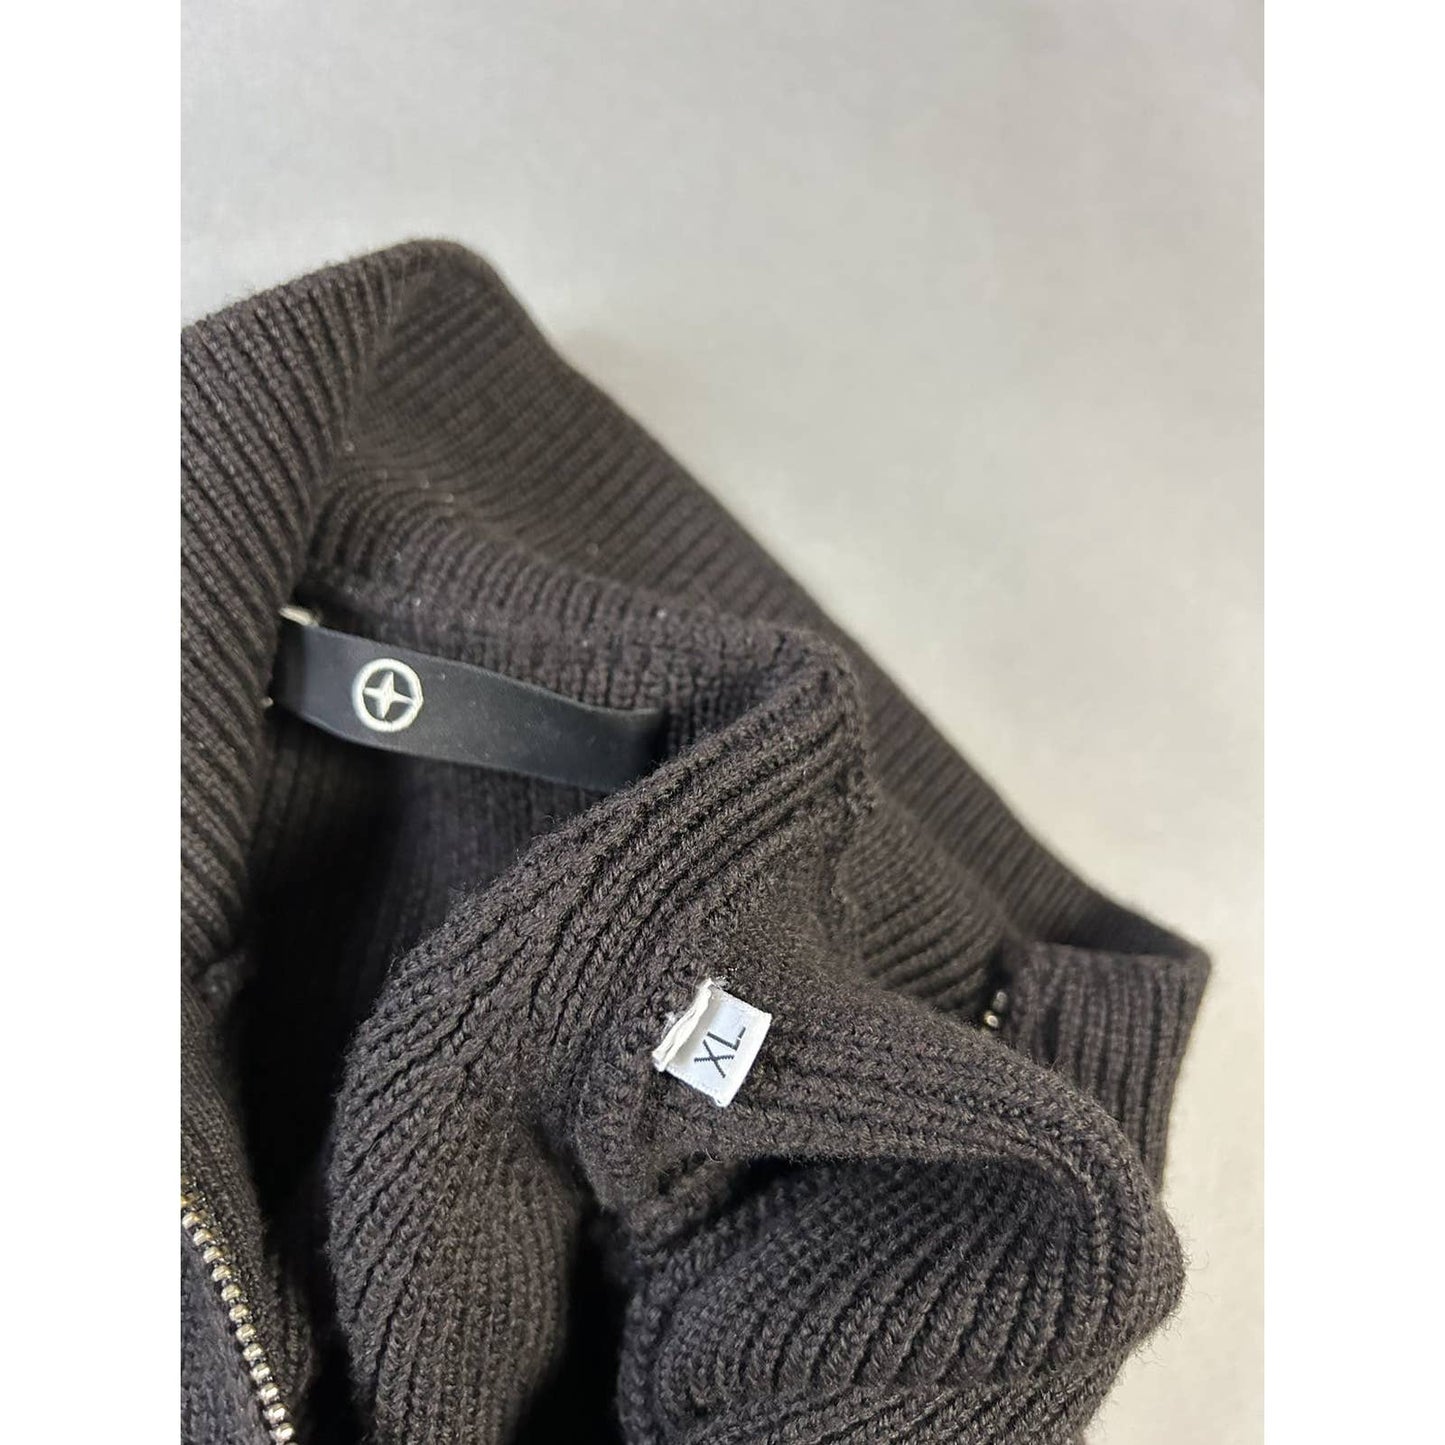 Stone Island denims black zip sweater vintage knit